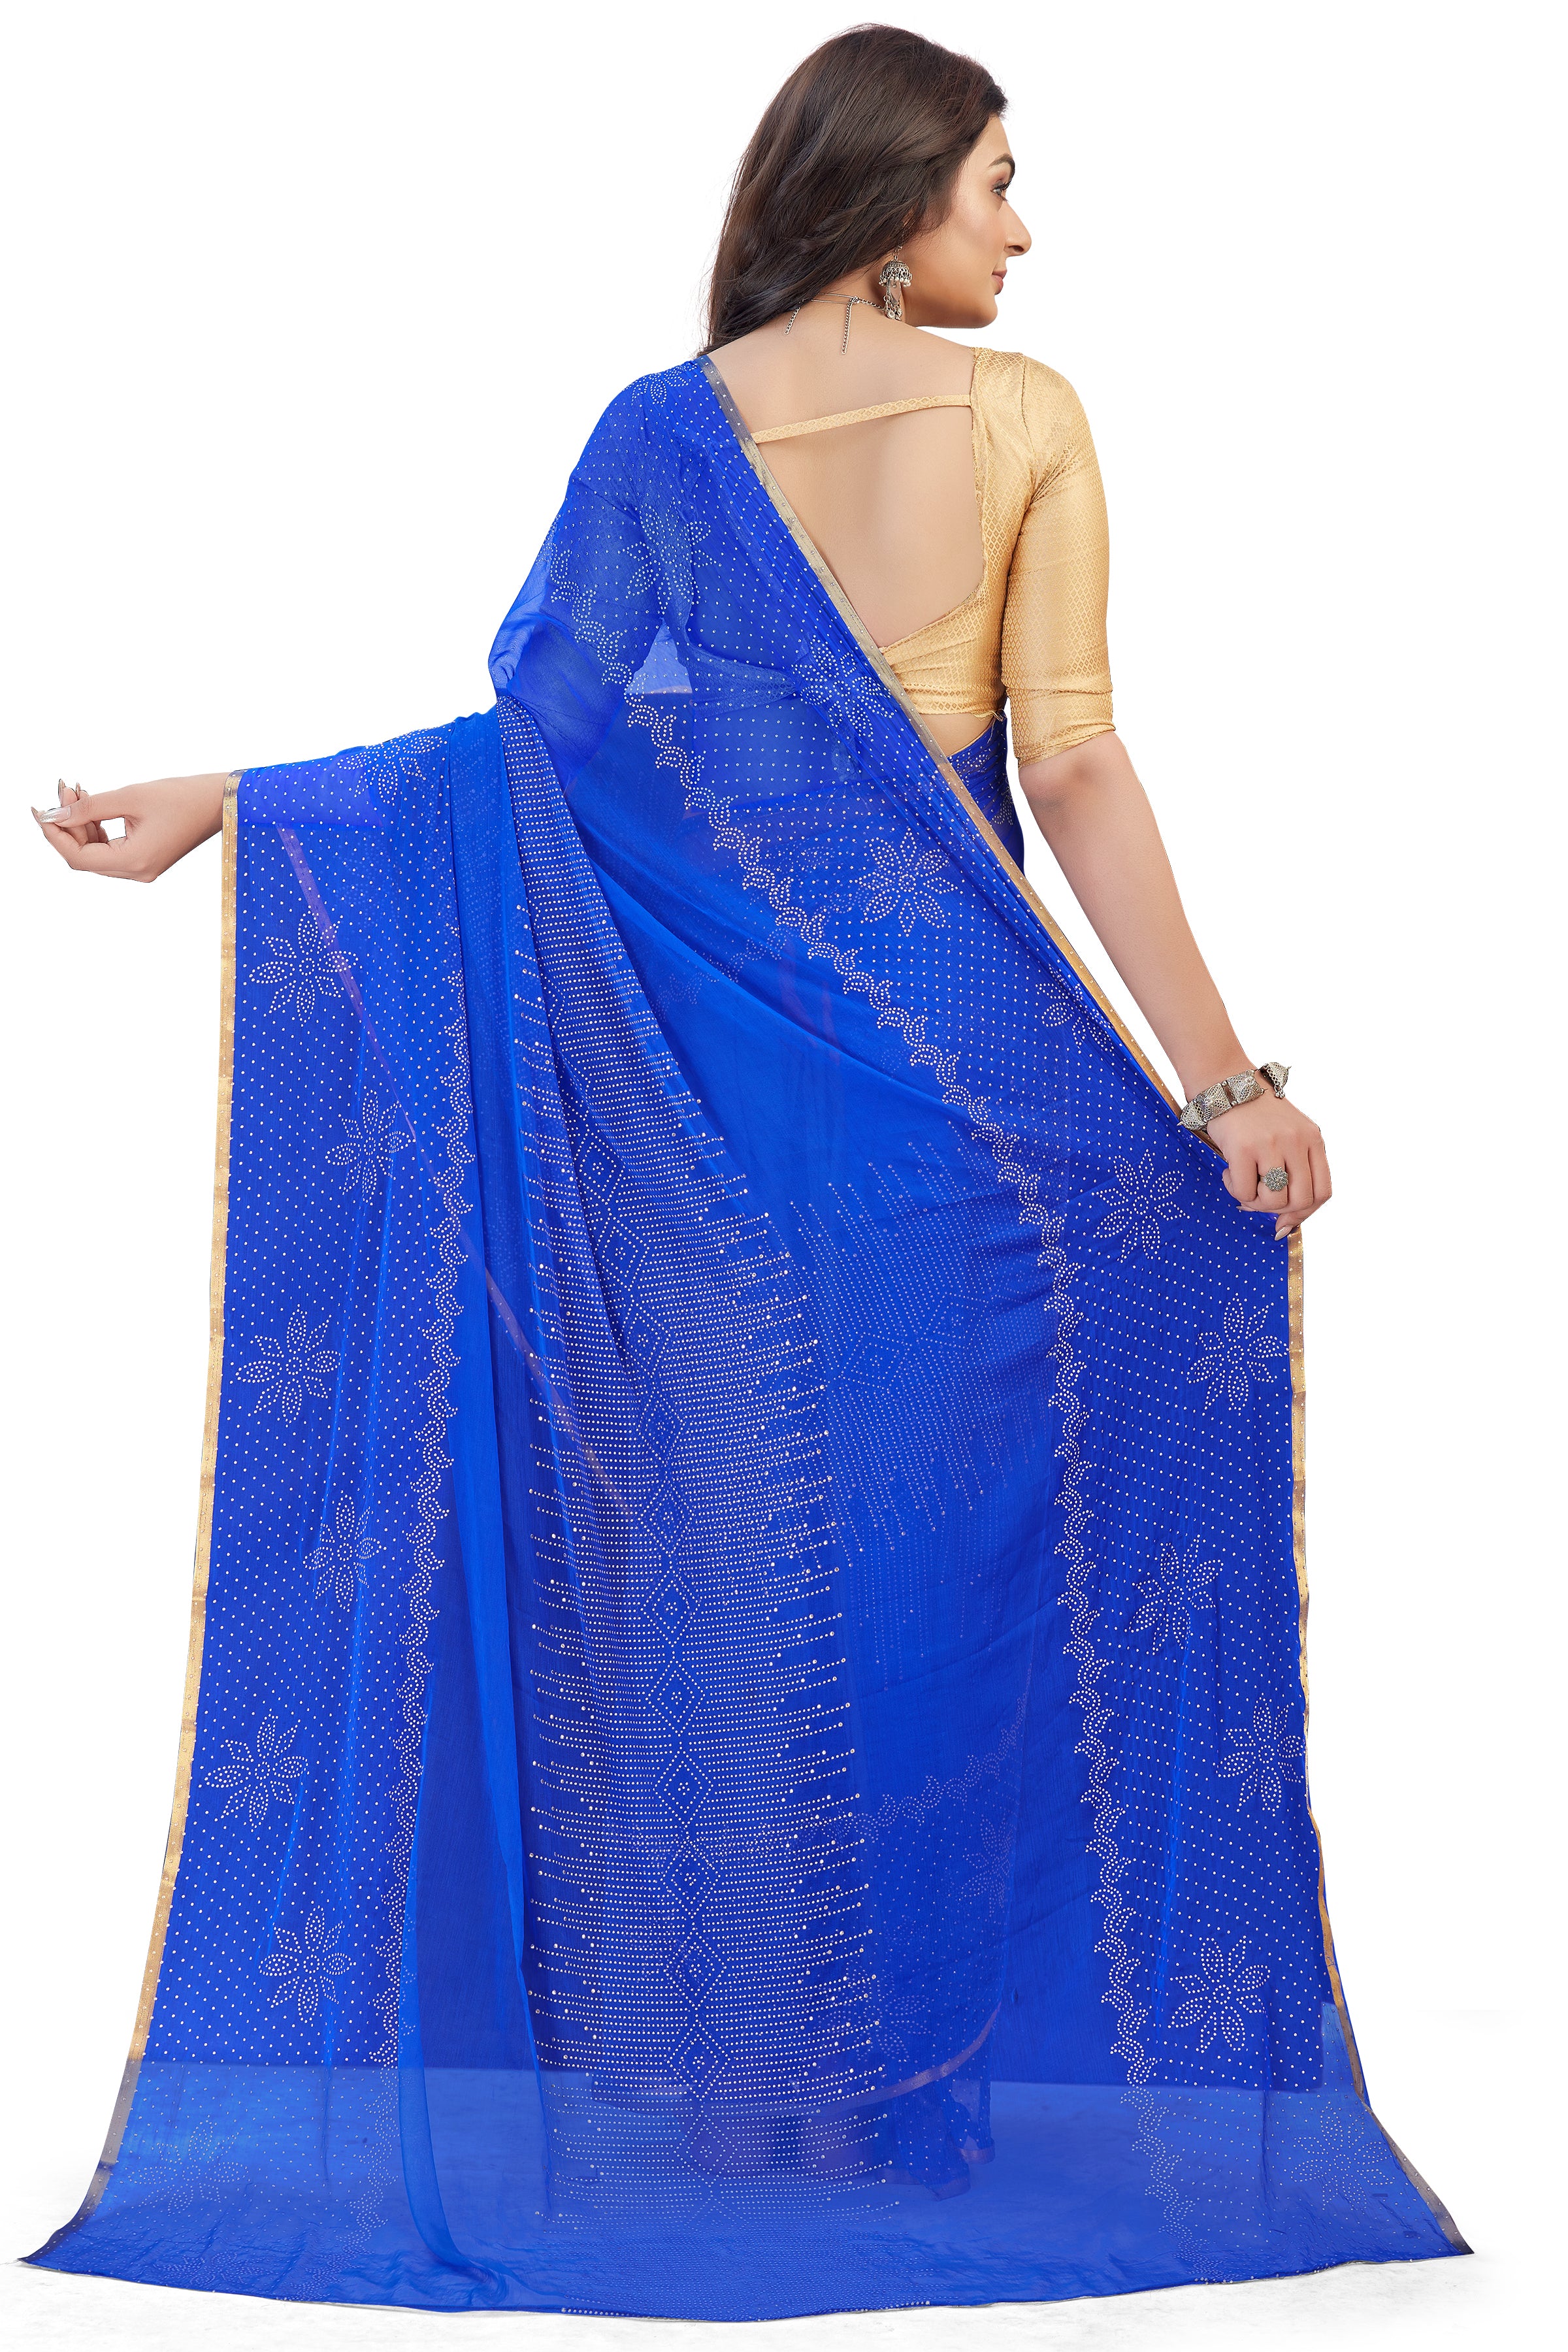 Women's Bandhani Daily Wear Chiffon Sari With Blouse Piece (Royal Blue) - NIMIDHYA